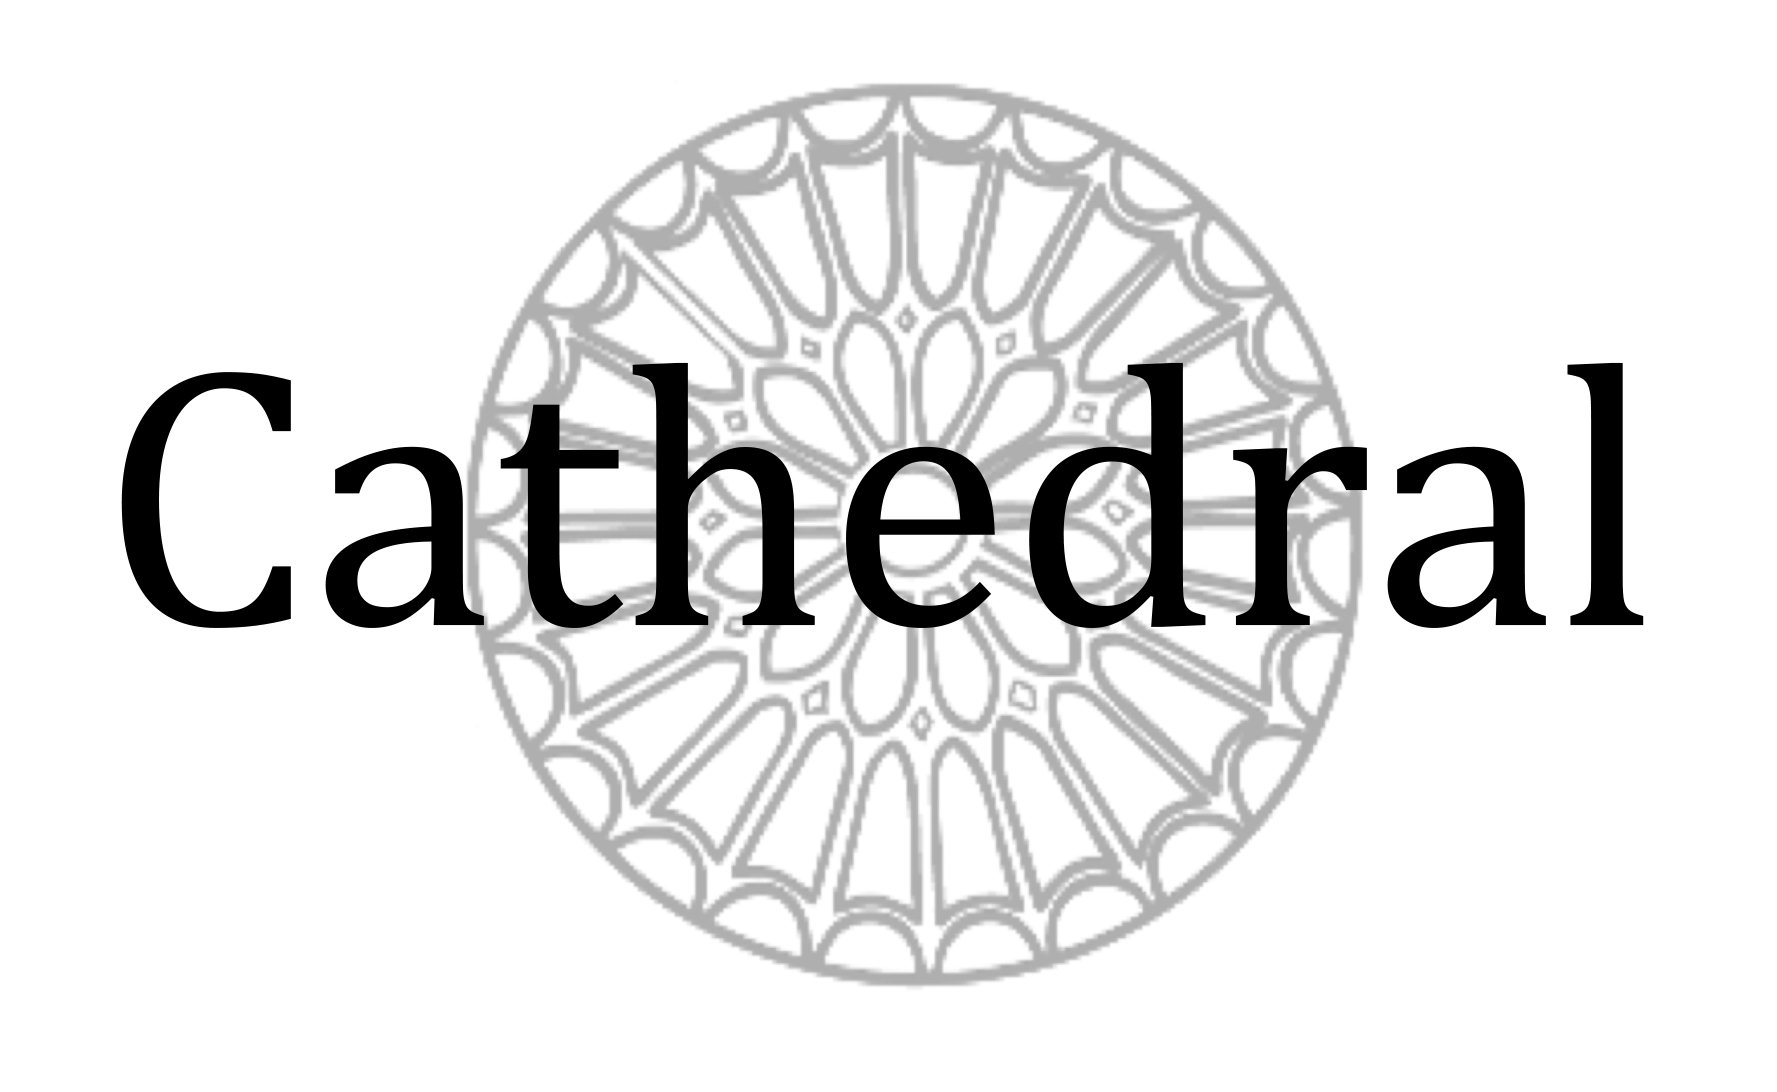 Trademark Logo CATHEDRAL